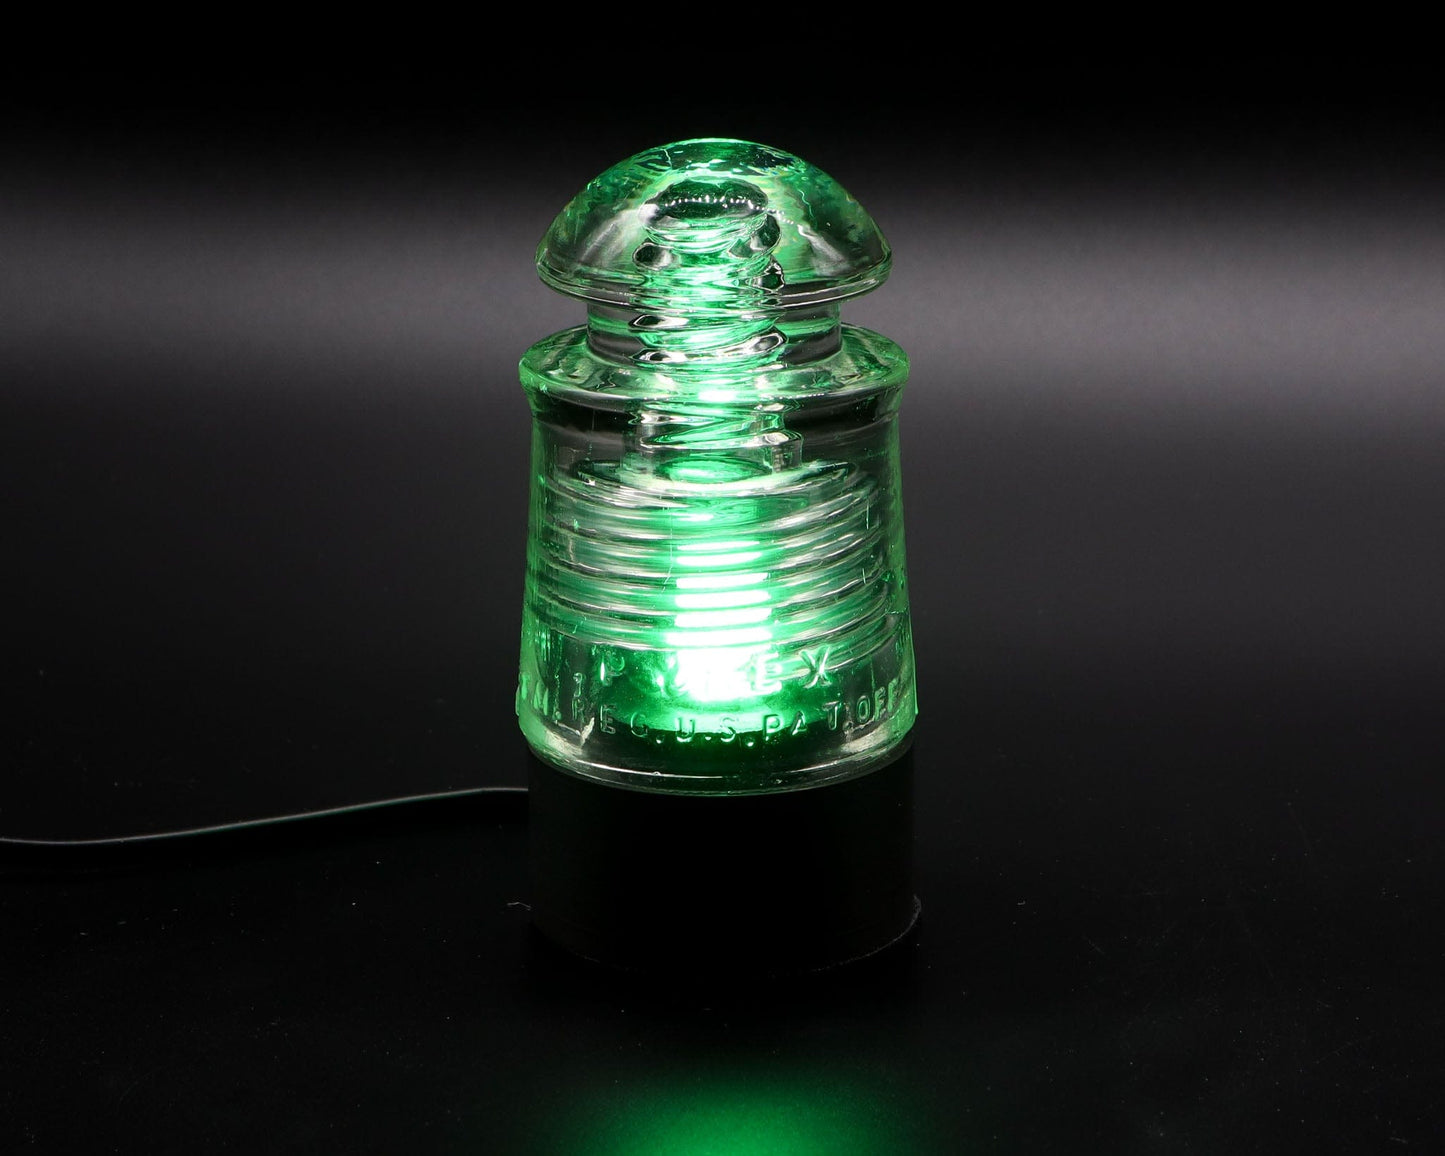 LightAndTimeArt Industrial lamp Lamp Base for "PYREX C17" Glass Insulators, Industrial Lighting, Man Cave Decor